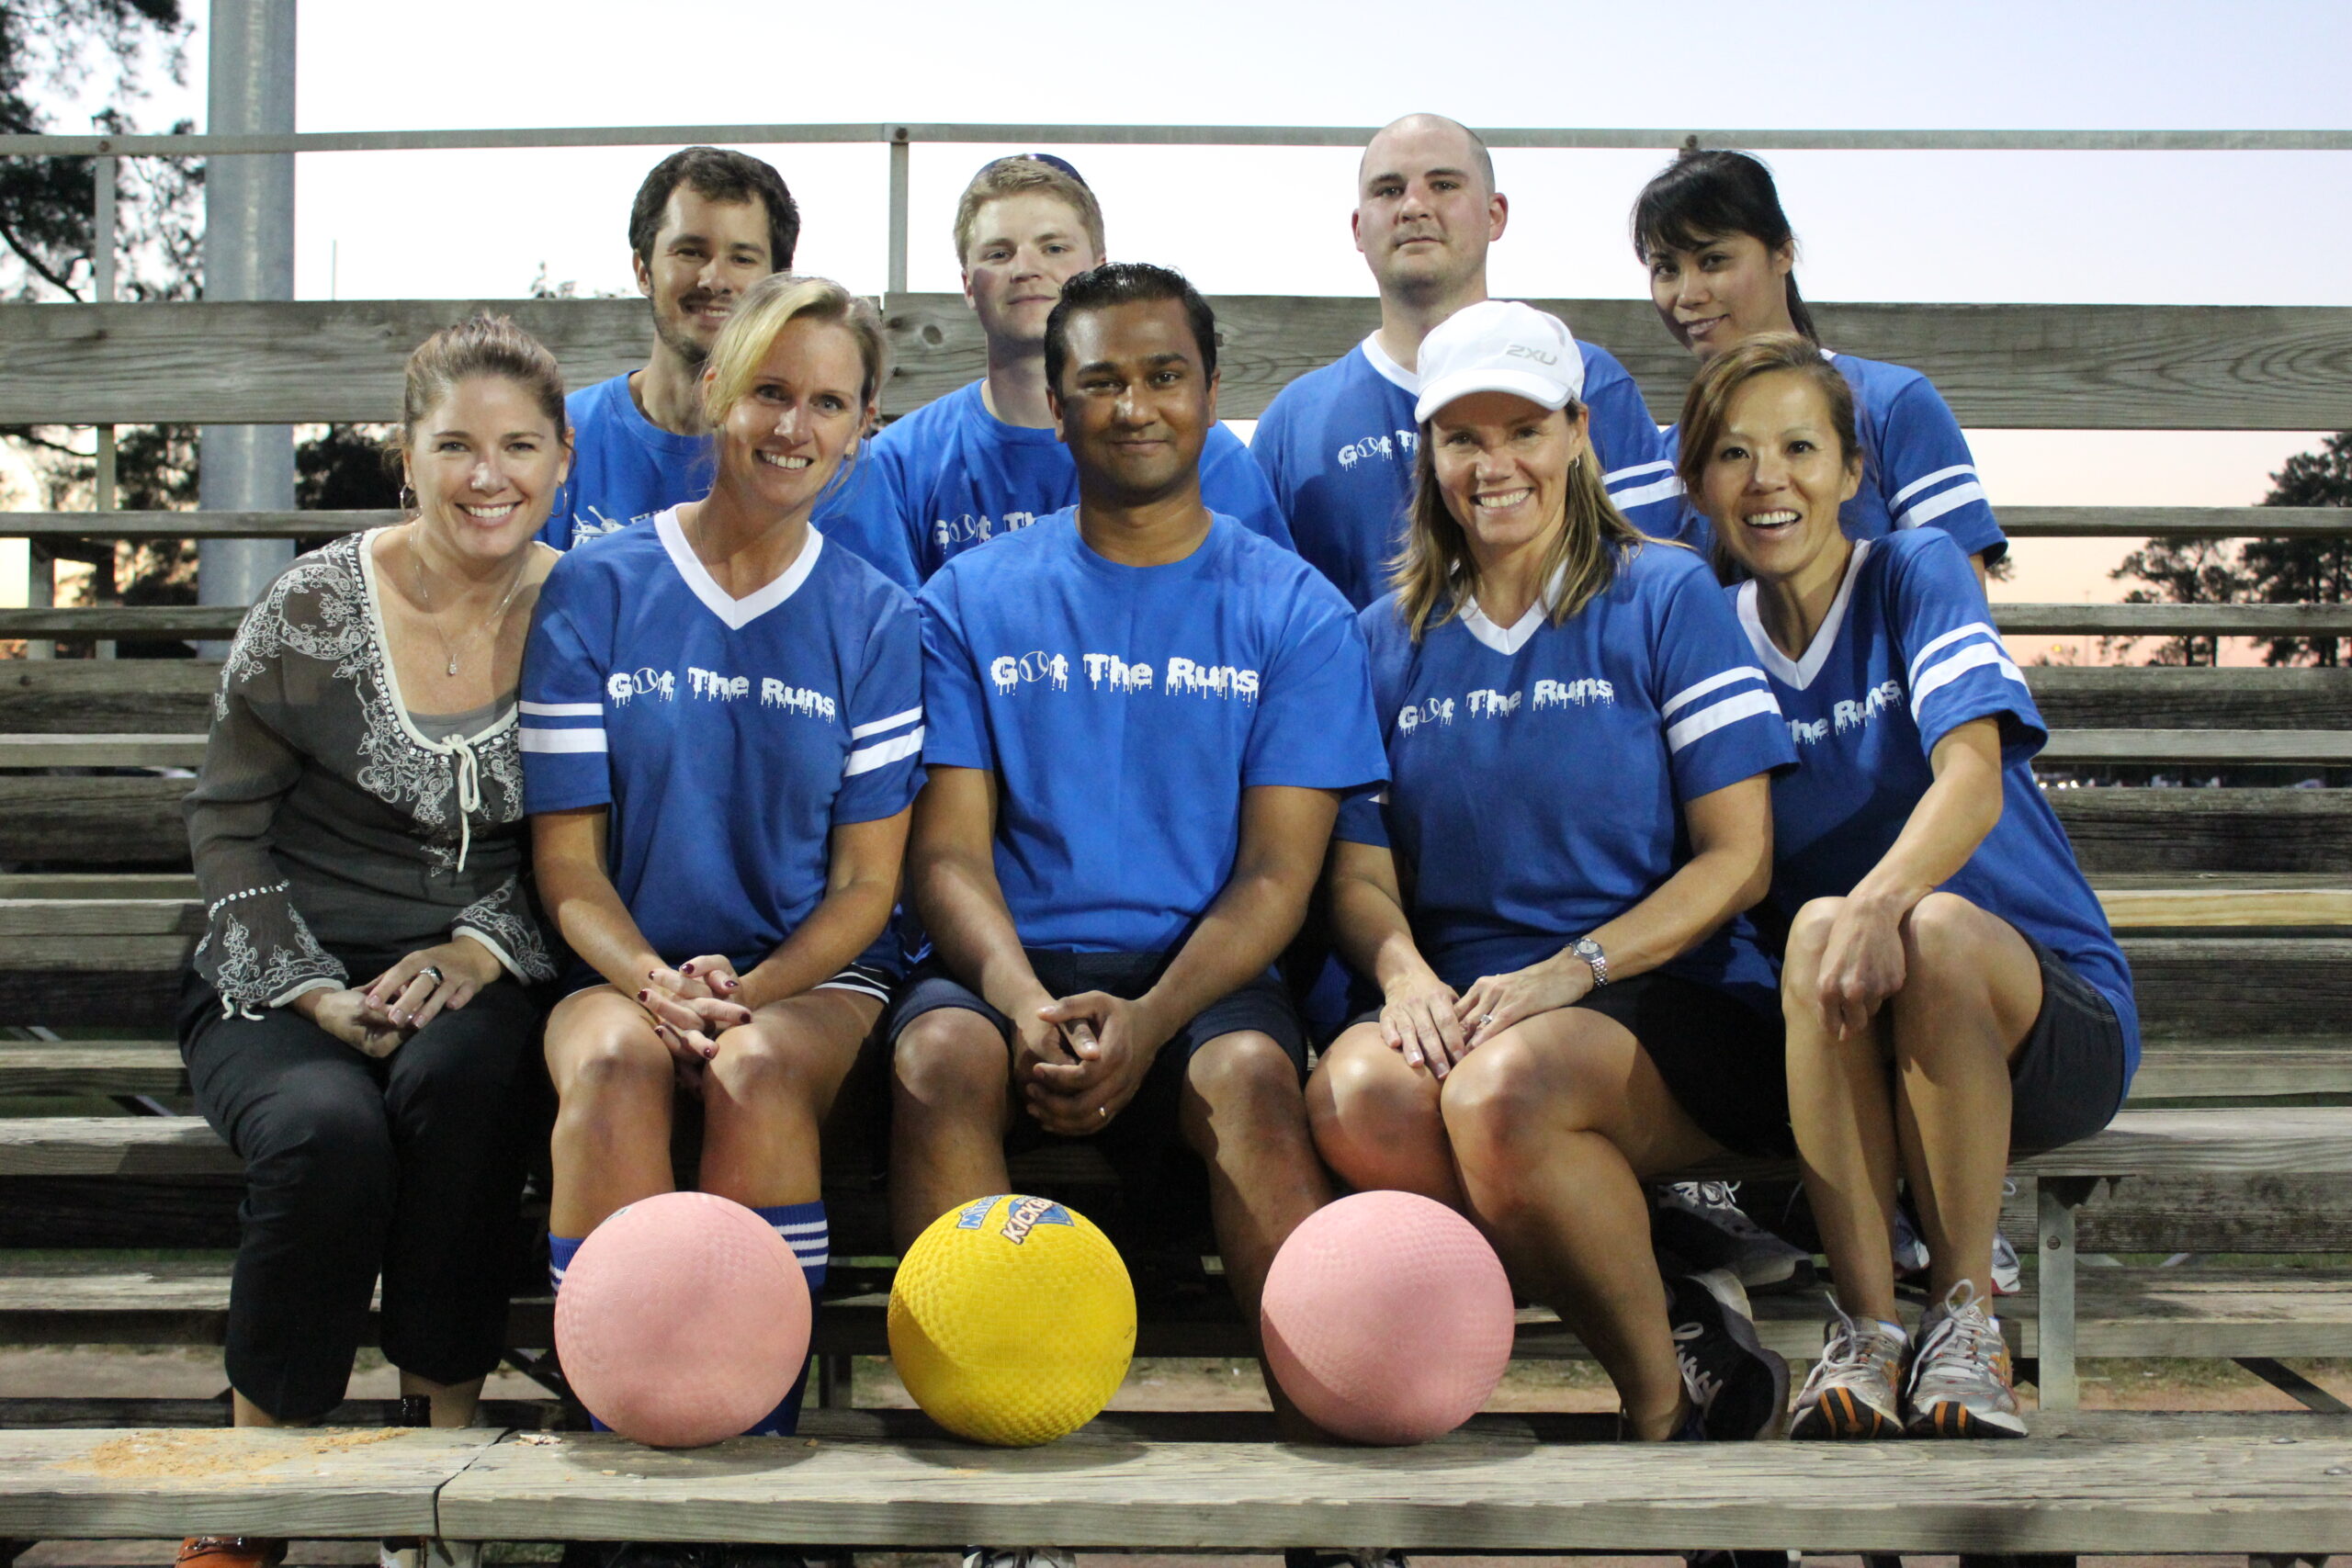 iOffice's very own dodgeball team